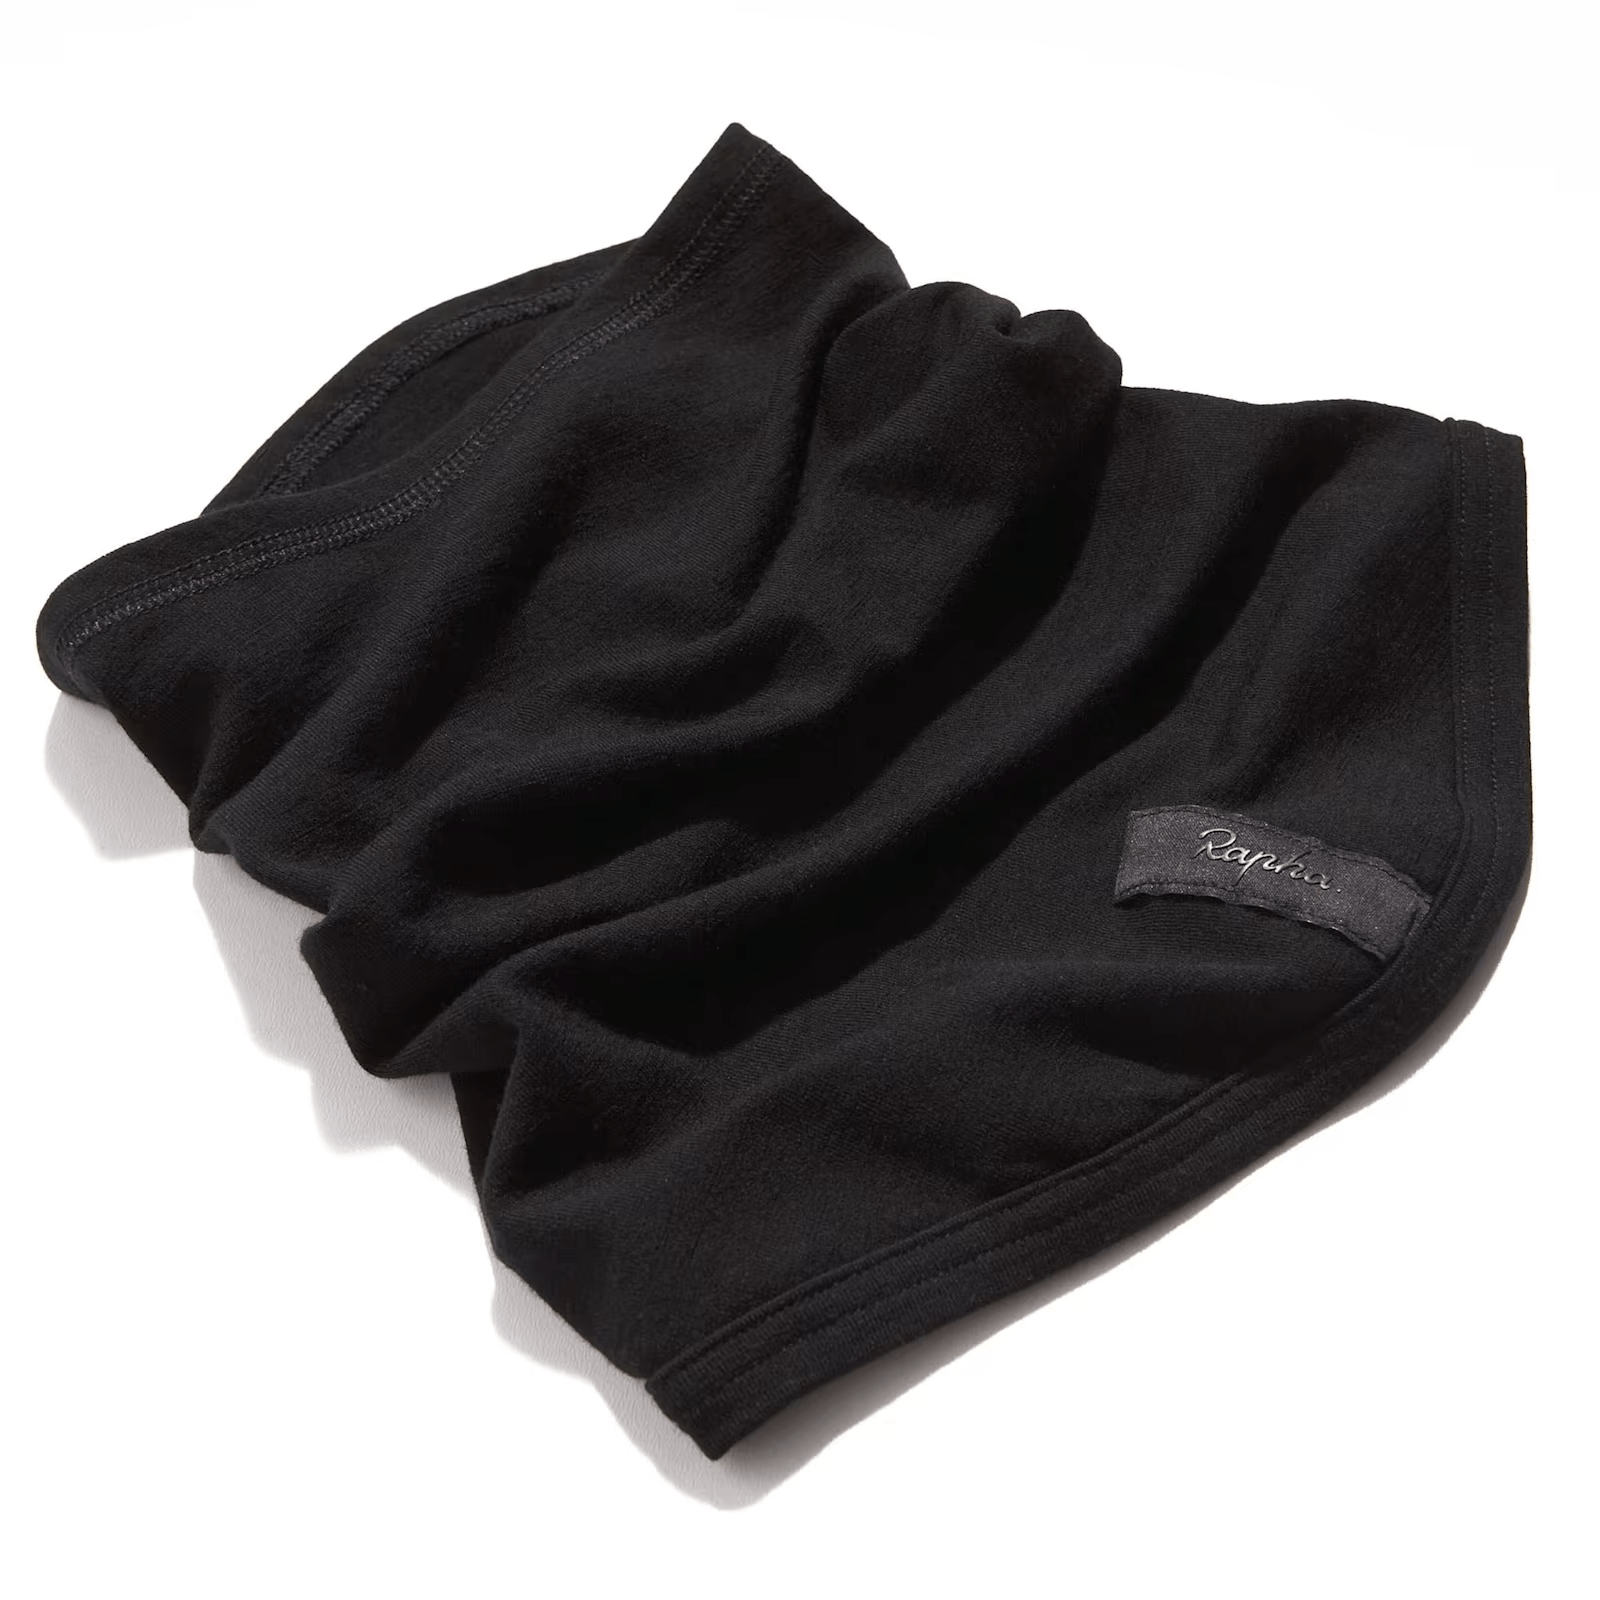 Rapha Winter Collar Black Apparel - Apparel Accessories - Warmers - Neck